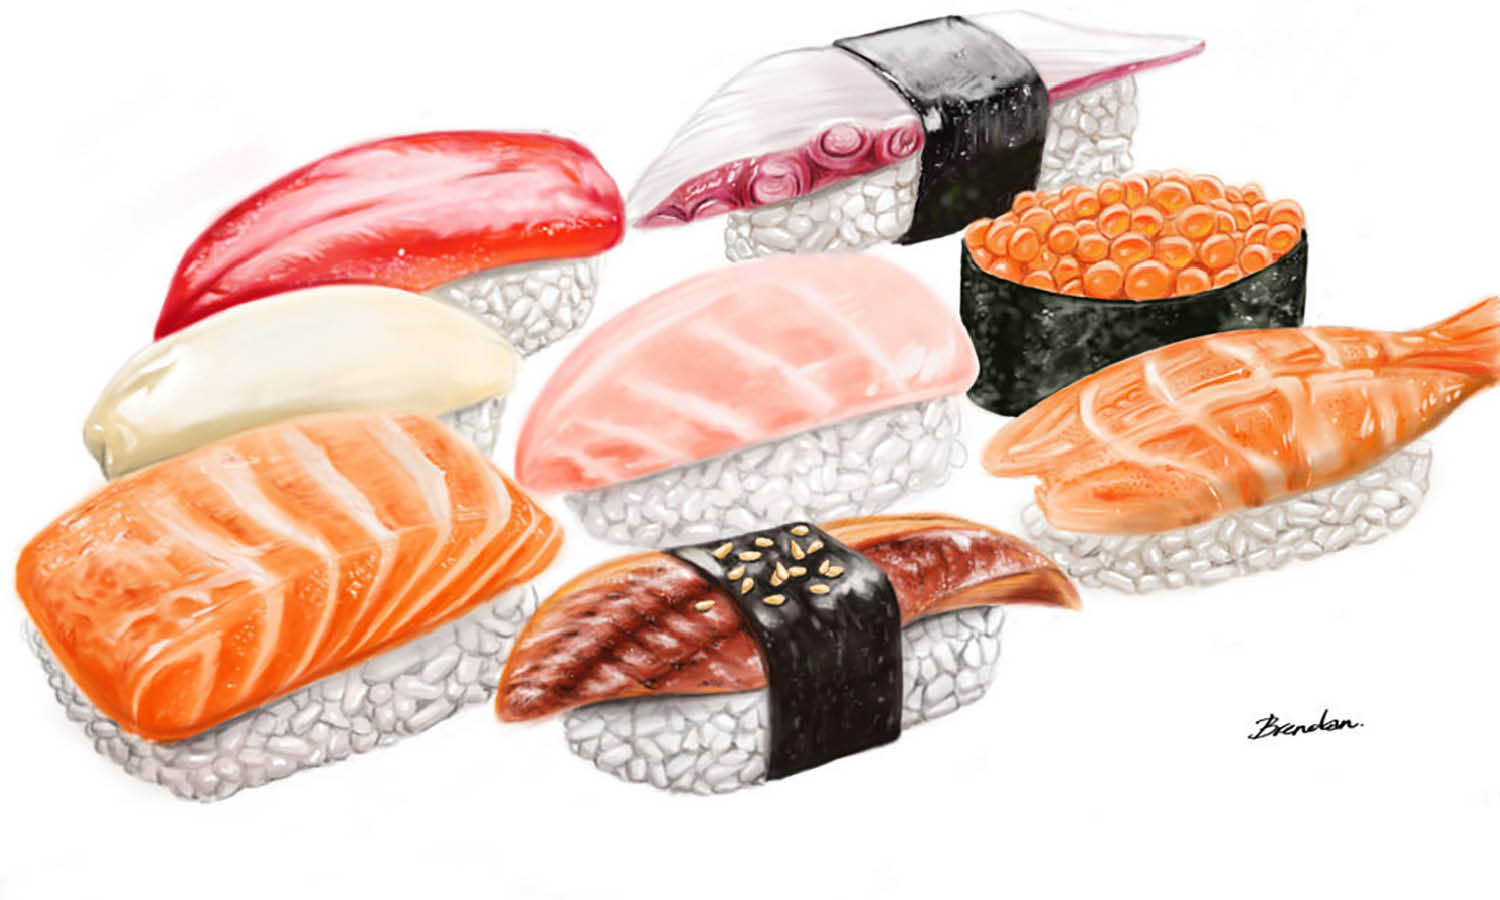 30 Best Sushi Illustration Ideas You Should Check